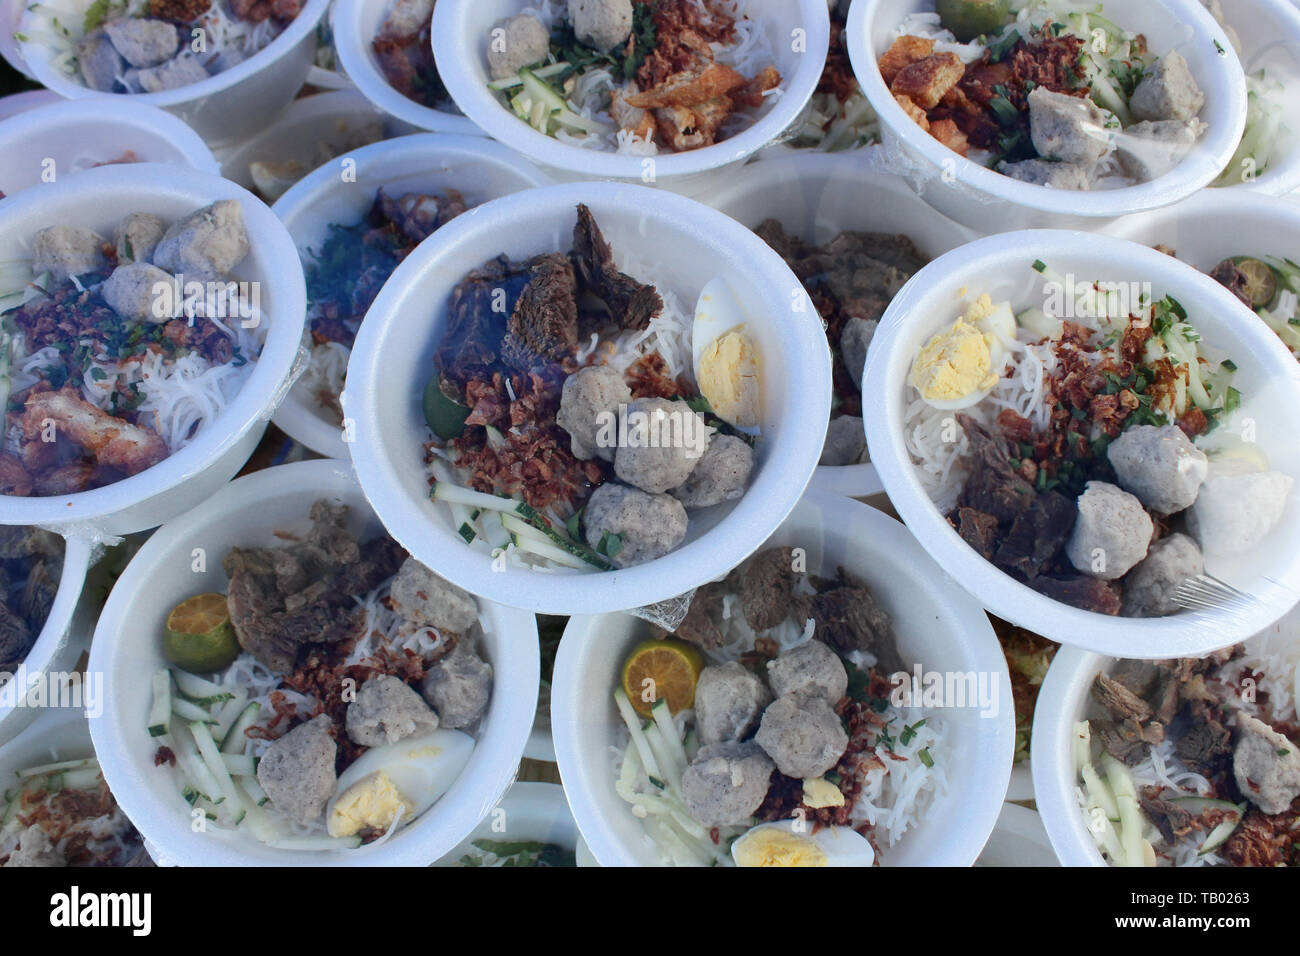 Famous indonesian street food  dish called Bakso at bazaar. Stock Photo